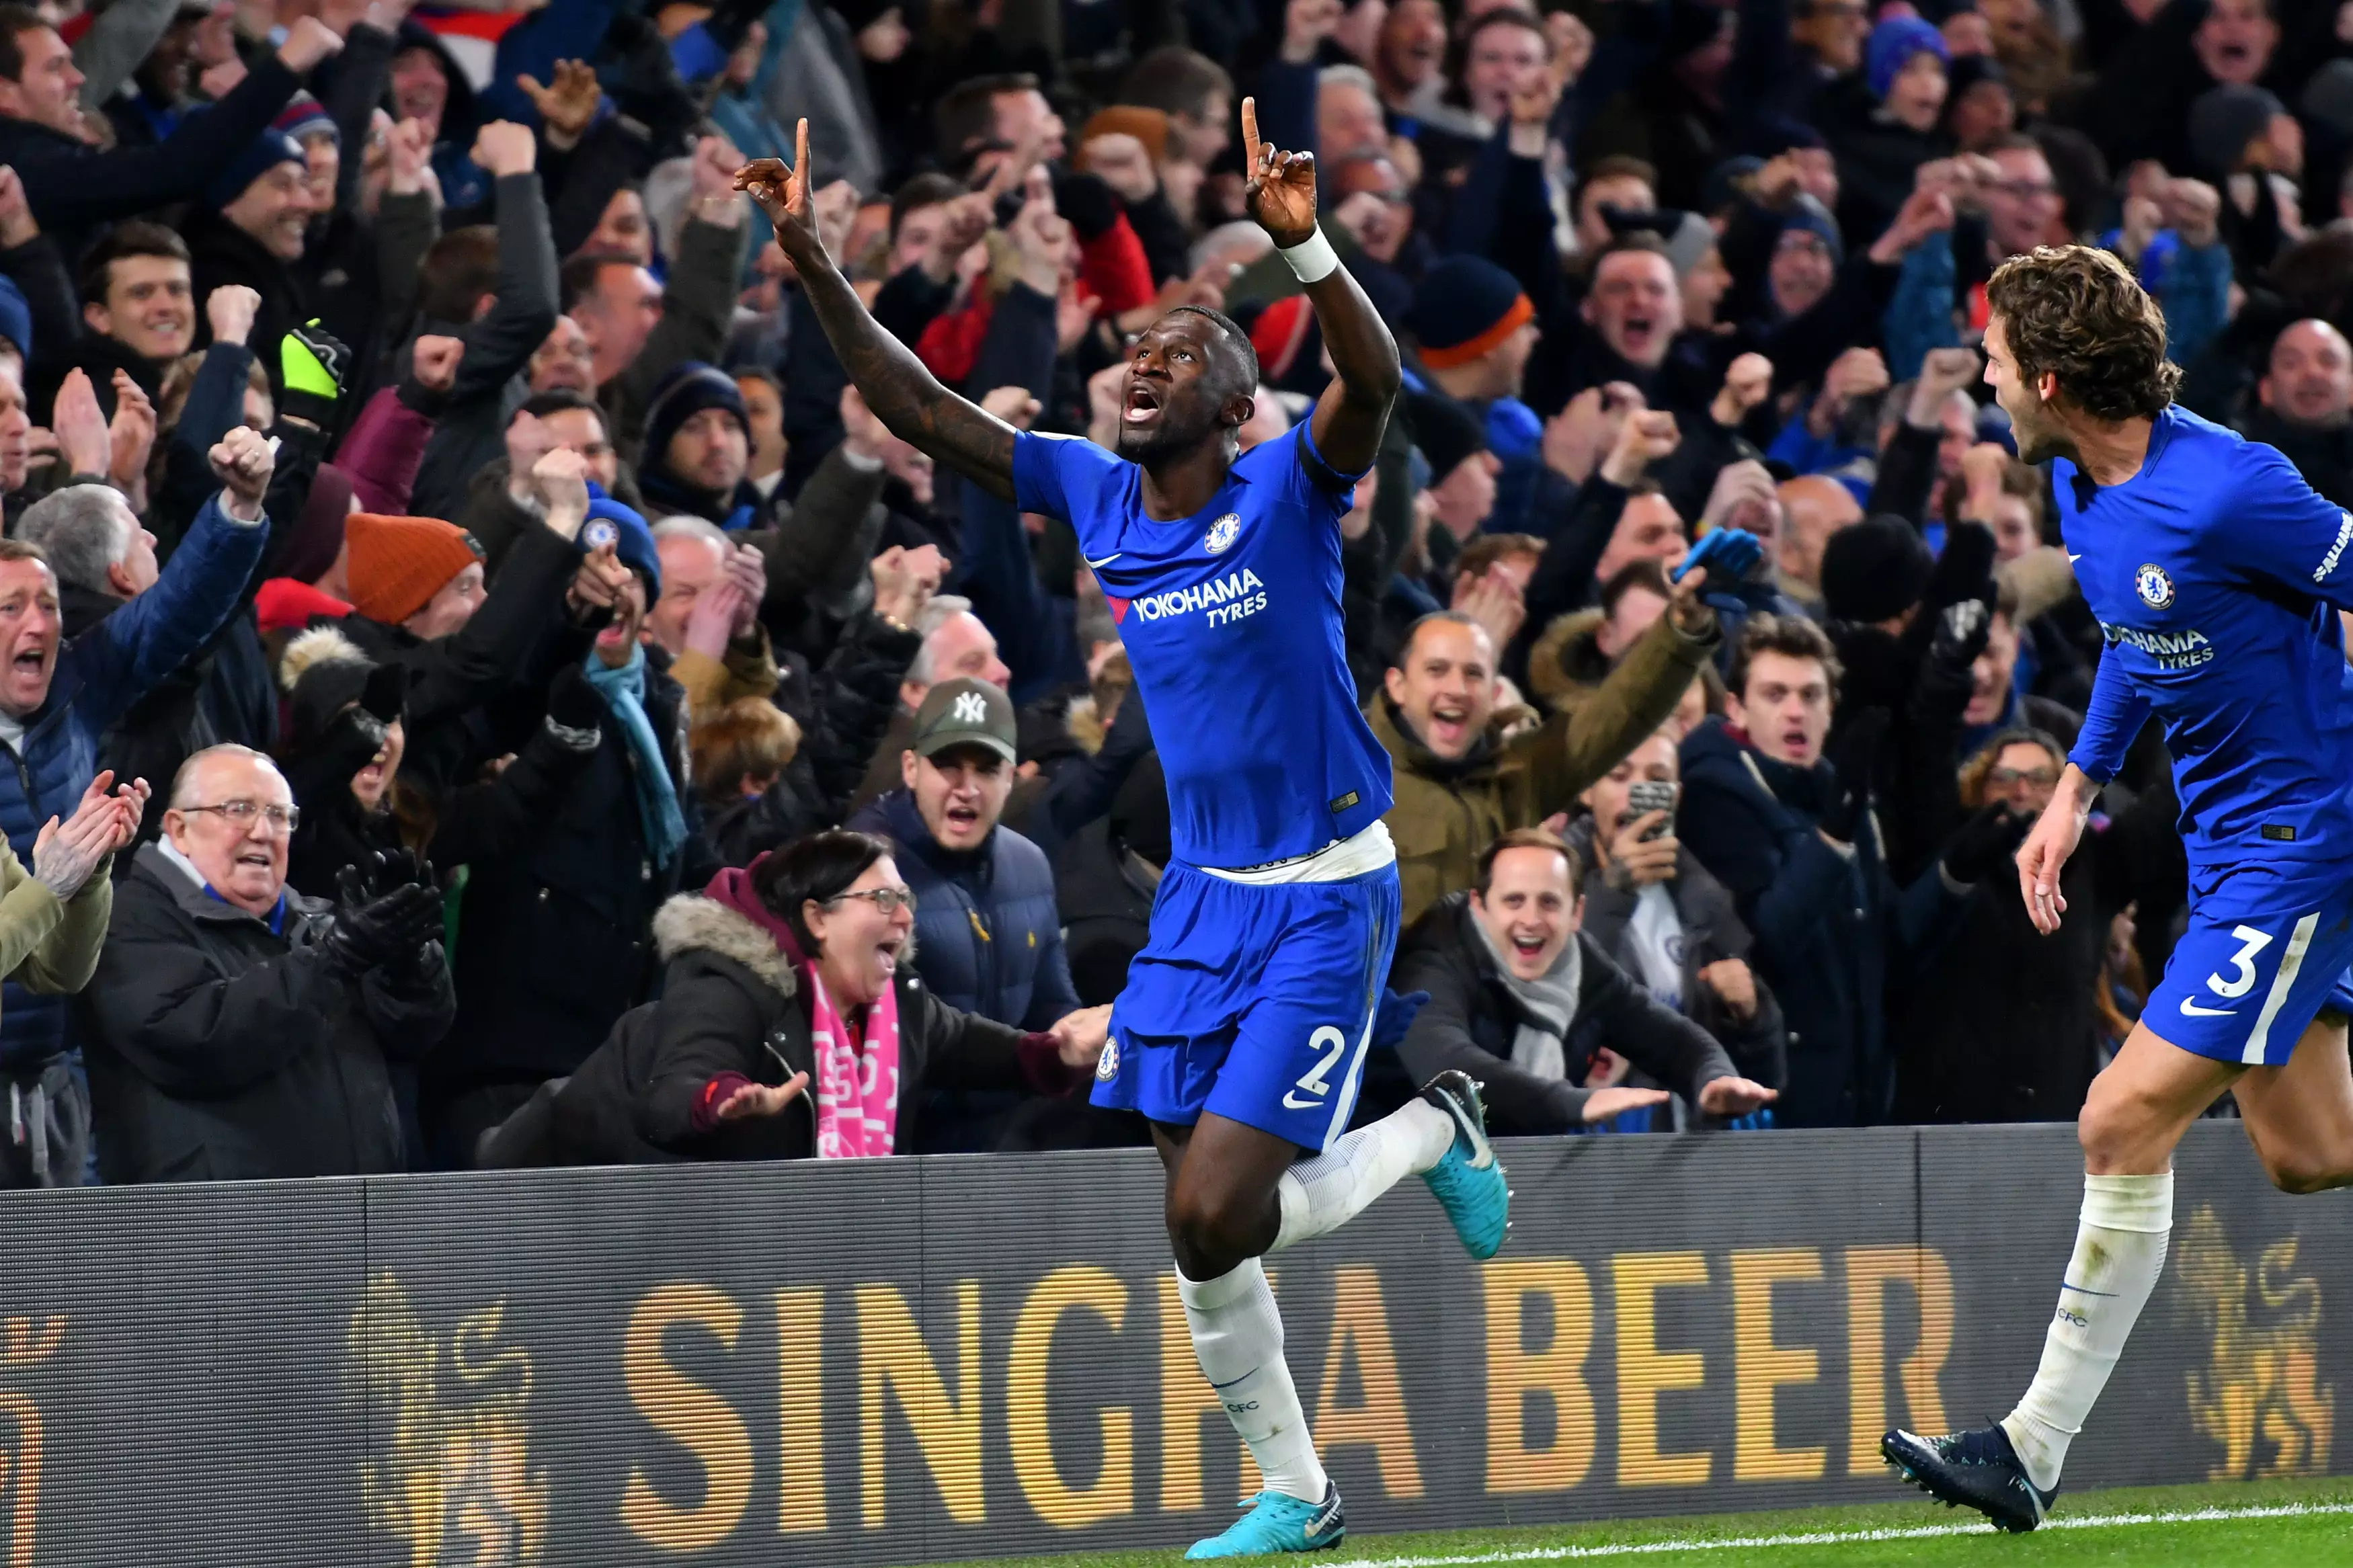 Rudiger celebrates scoring a goal for Chelsea. Image: PA